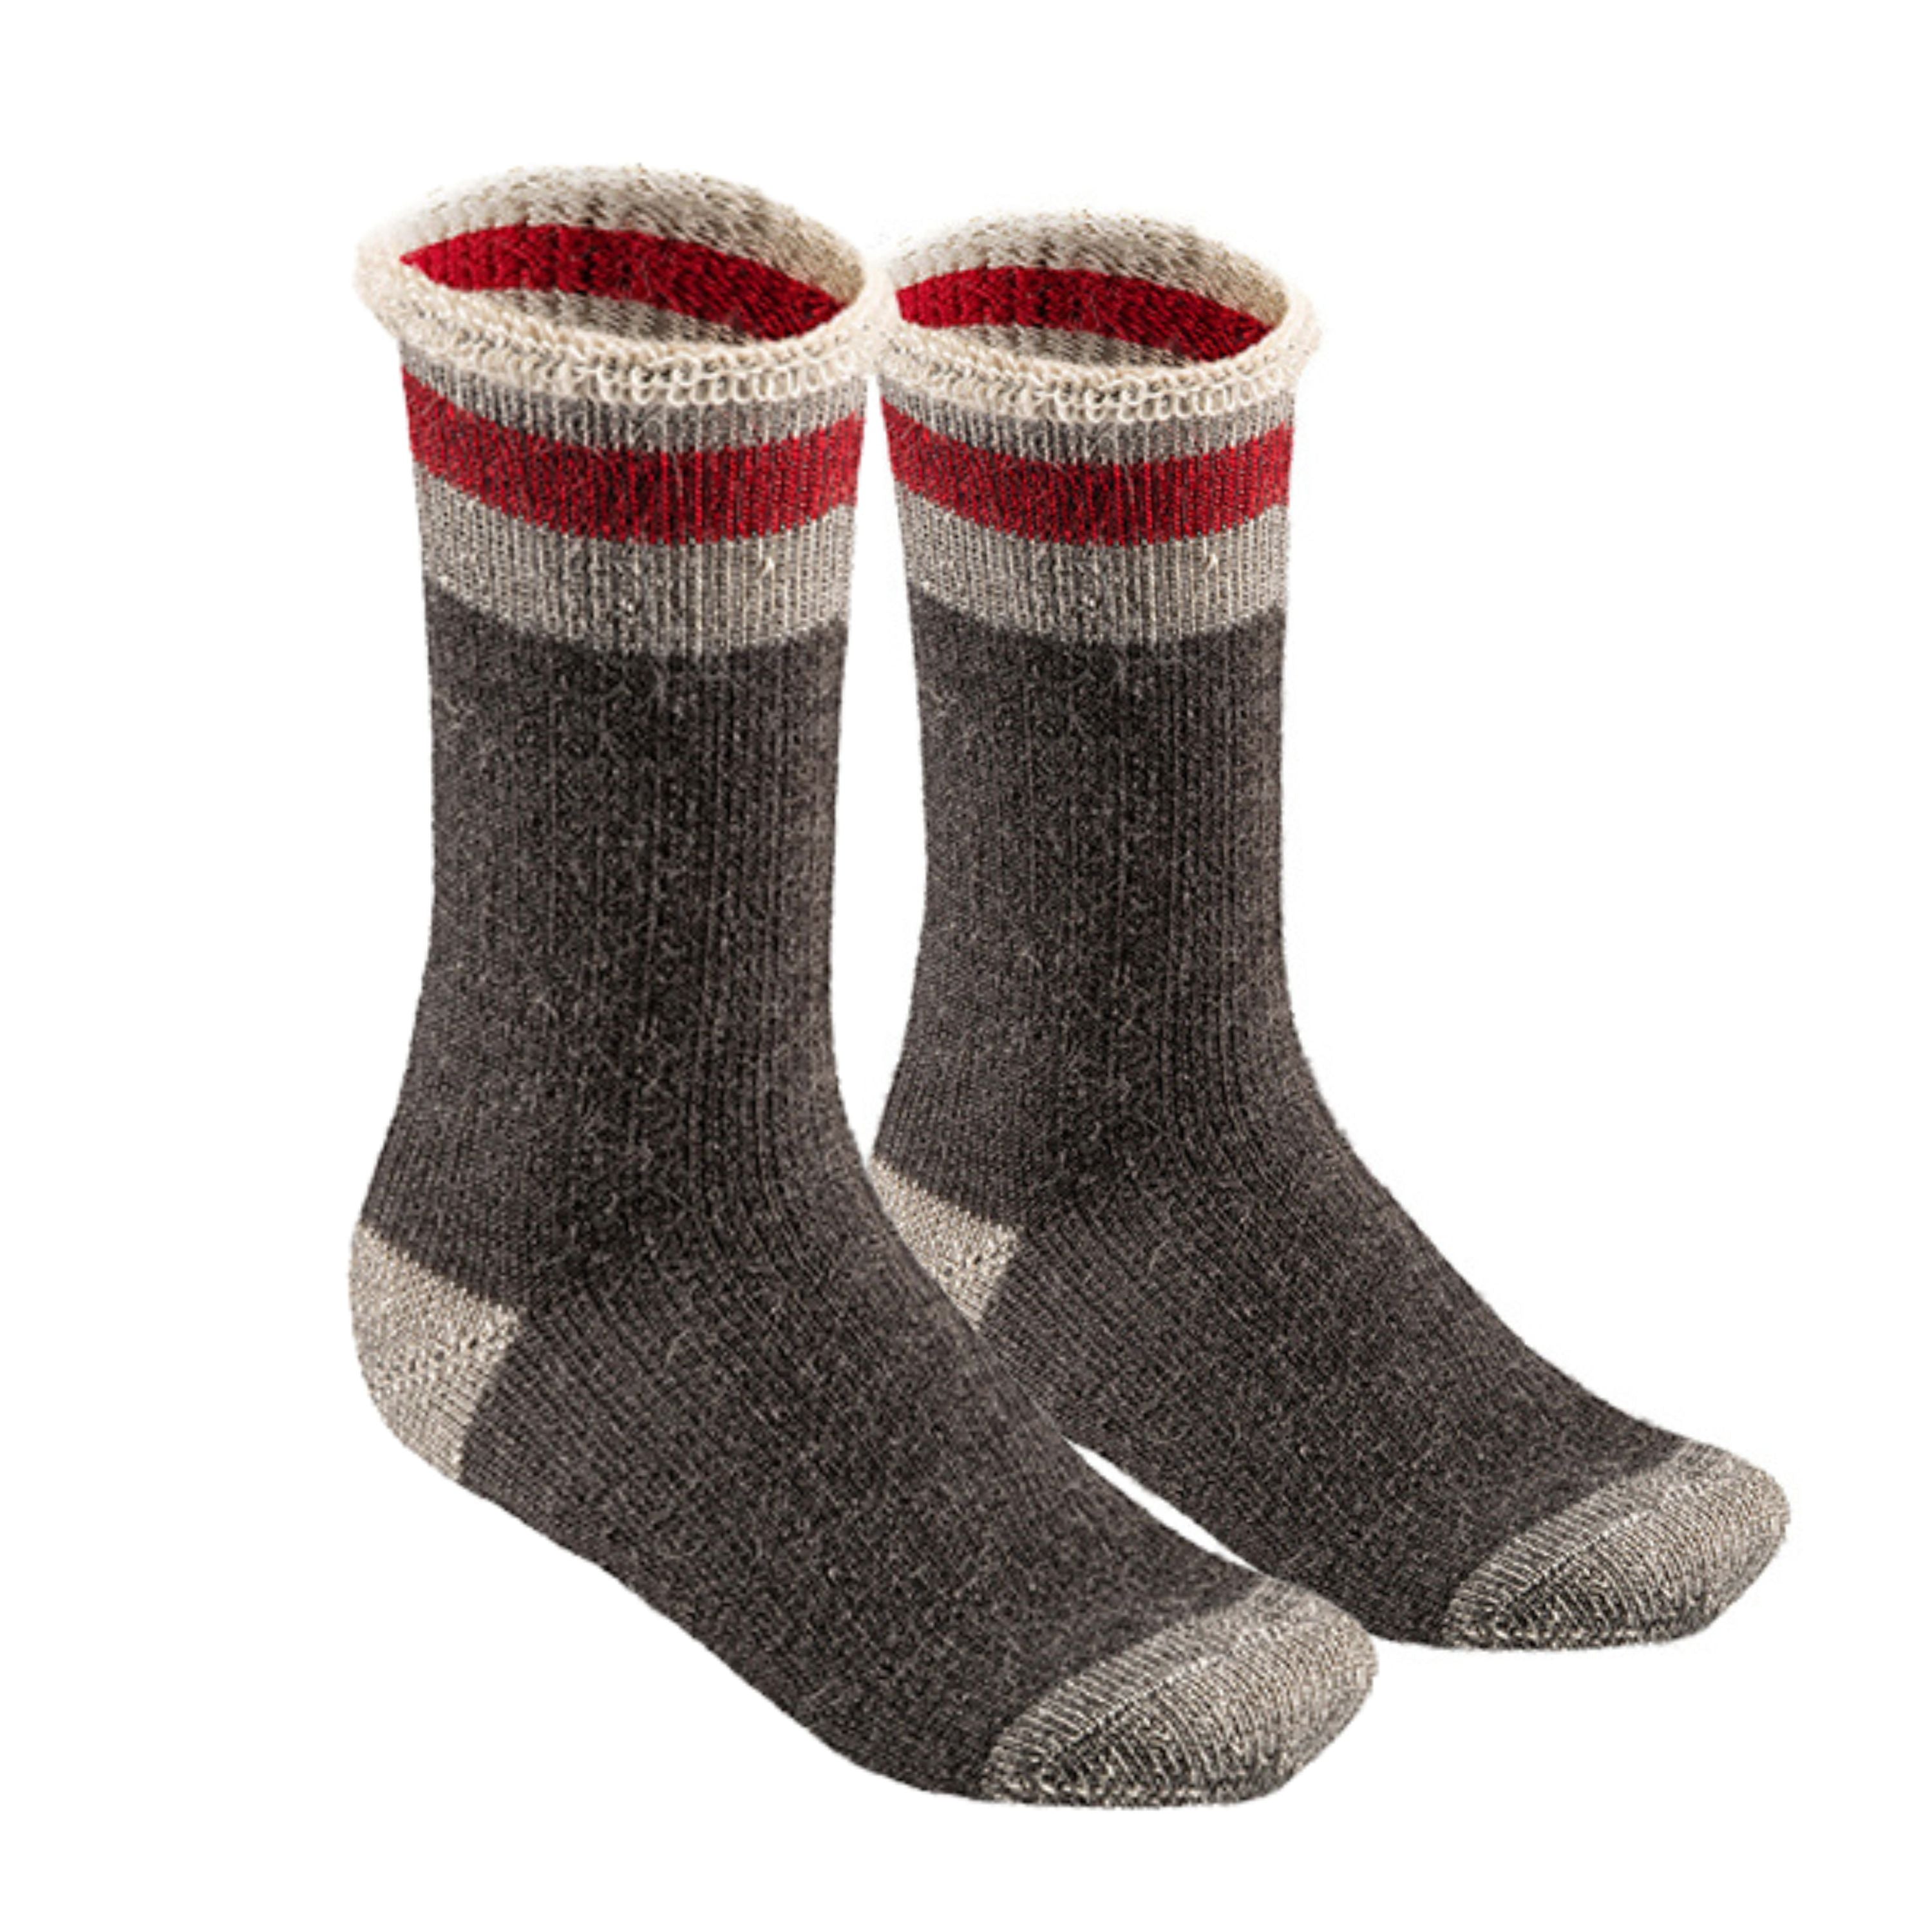 "Montana" Alpaga socks - Unisex